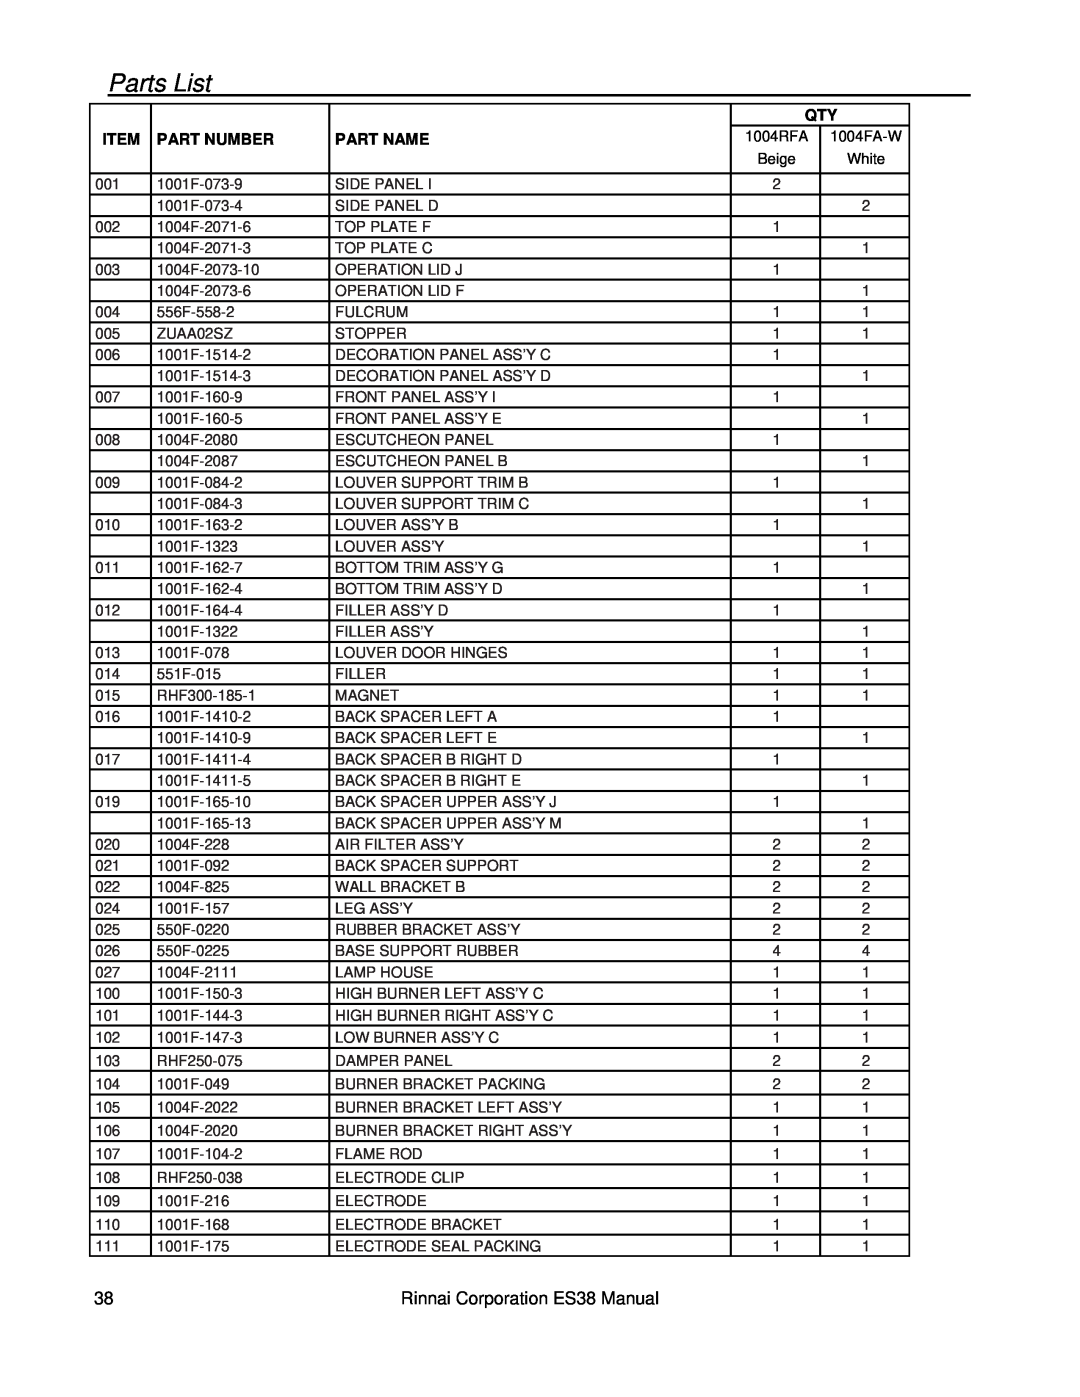 Rinnai installation manual Parts List, Rinnai Corporation ES38 Manual, Part Number, Part Name 